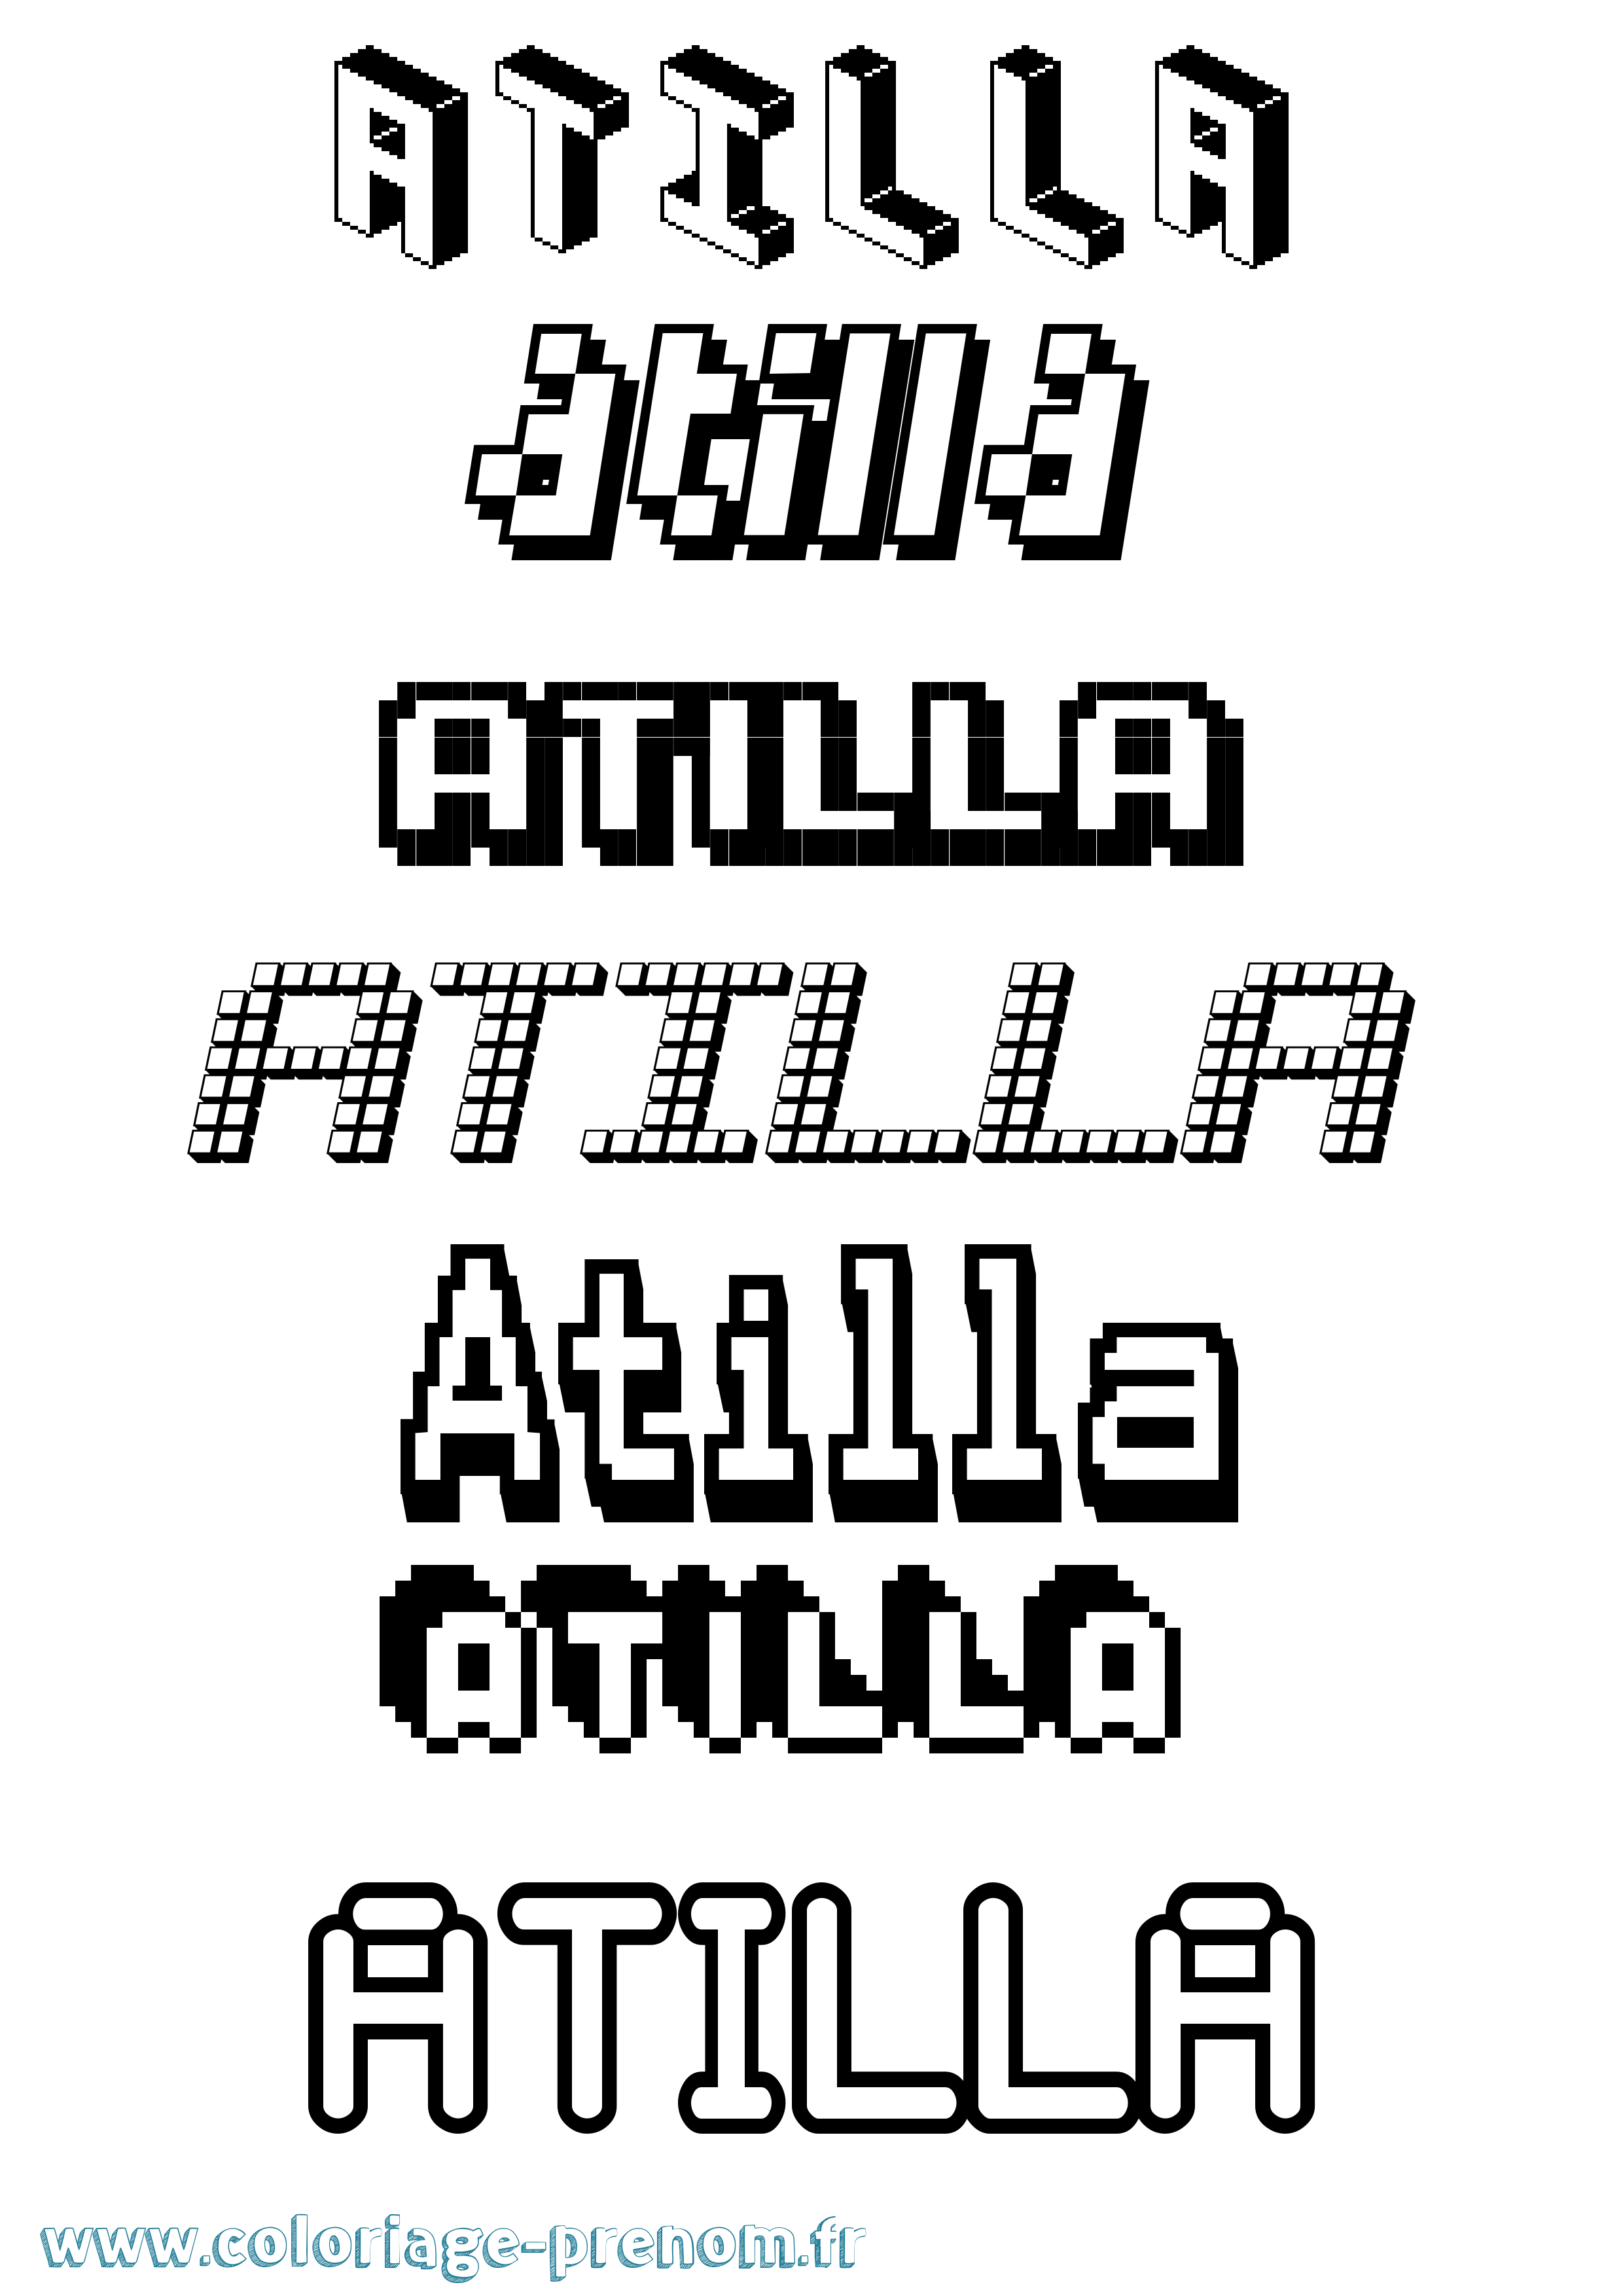 Coloriage prénom Atilla Pixel